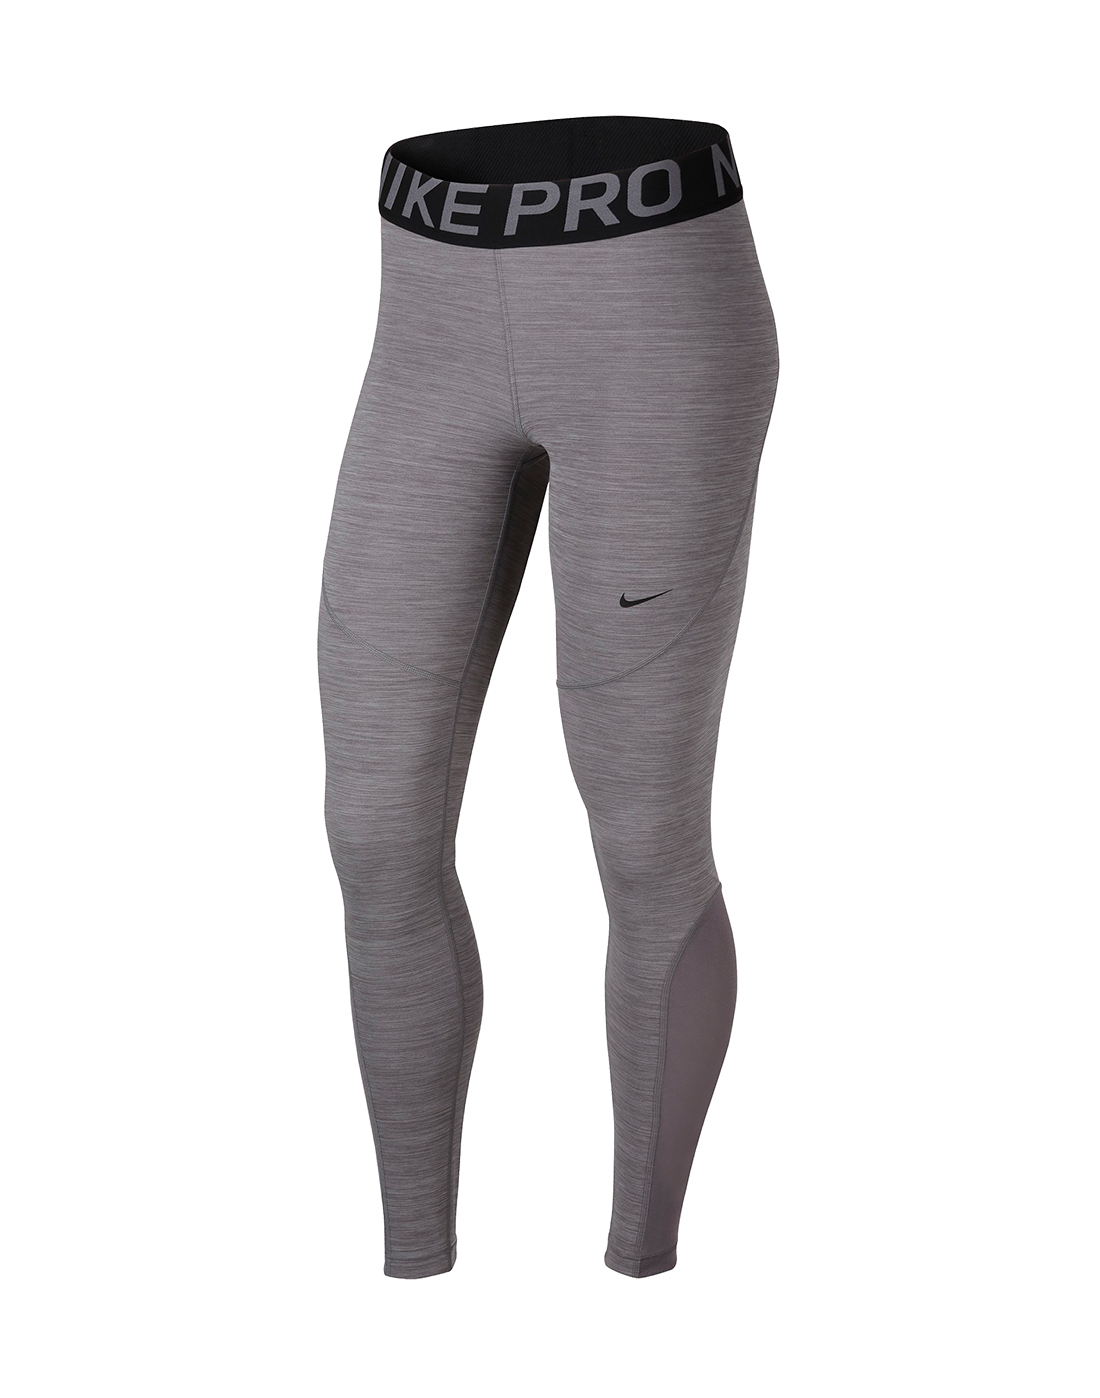 nike pro training leggings in grey